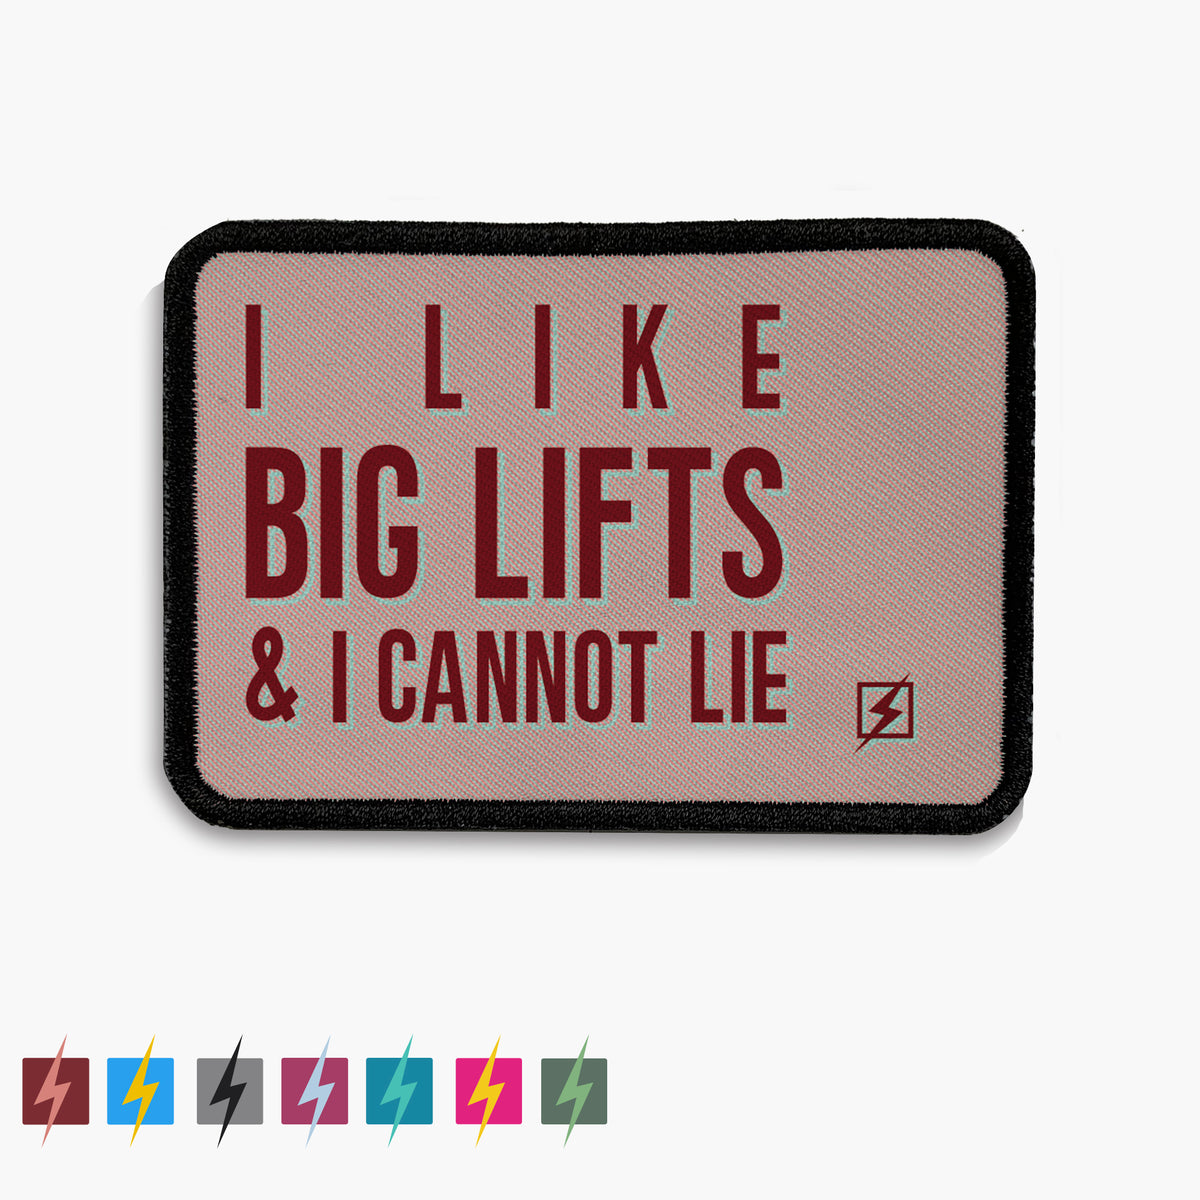 I like big lifts and I cannot lie funny fitness joke gym patch